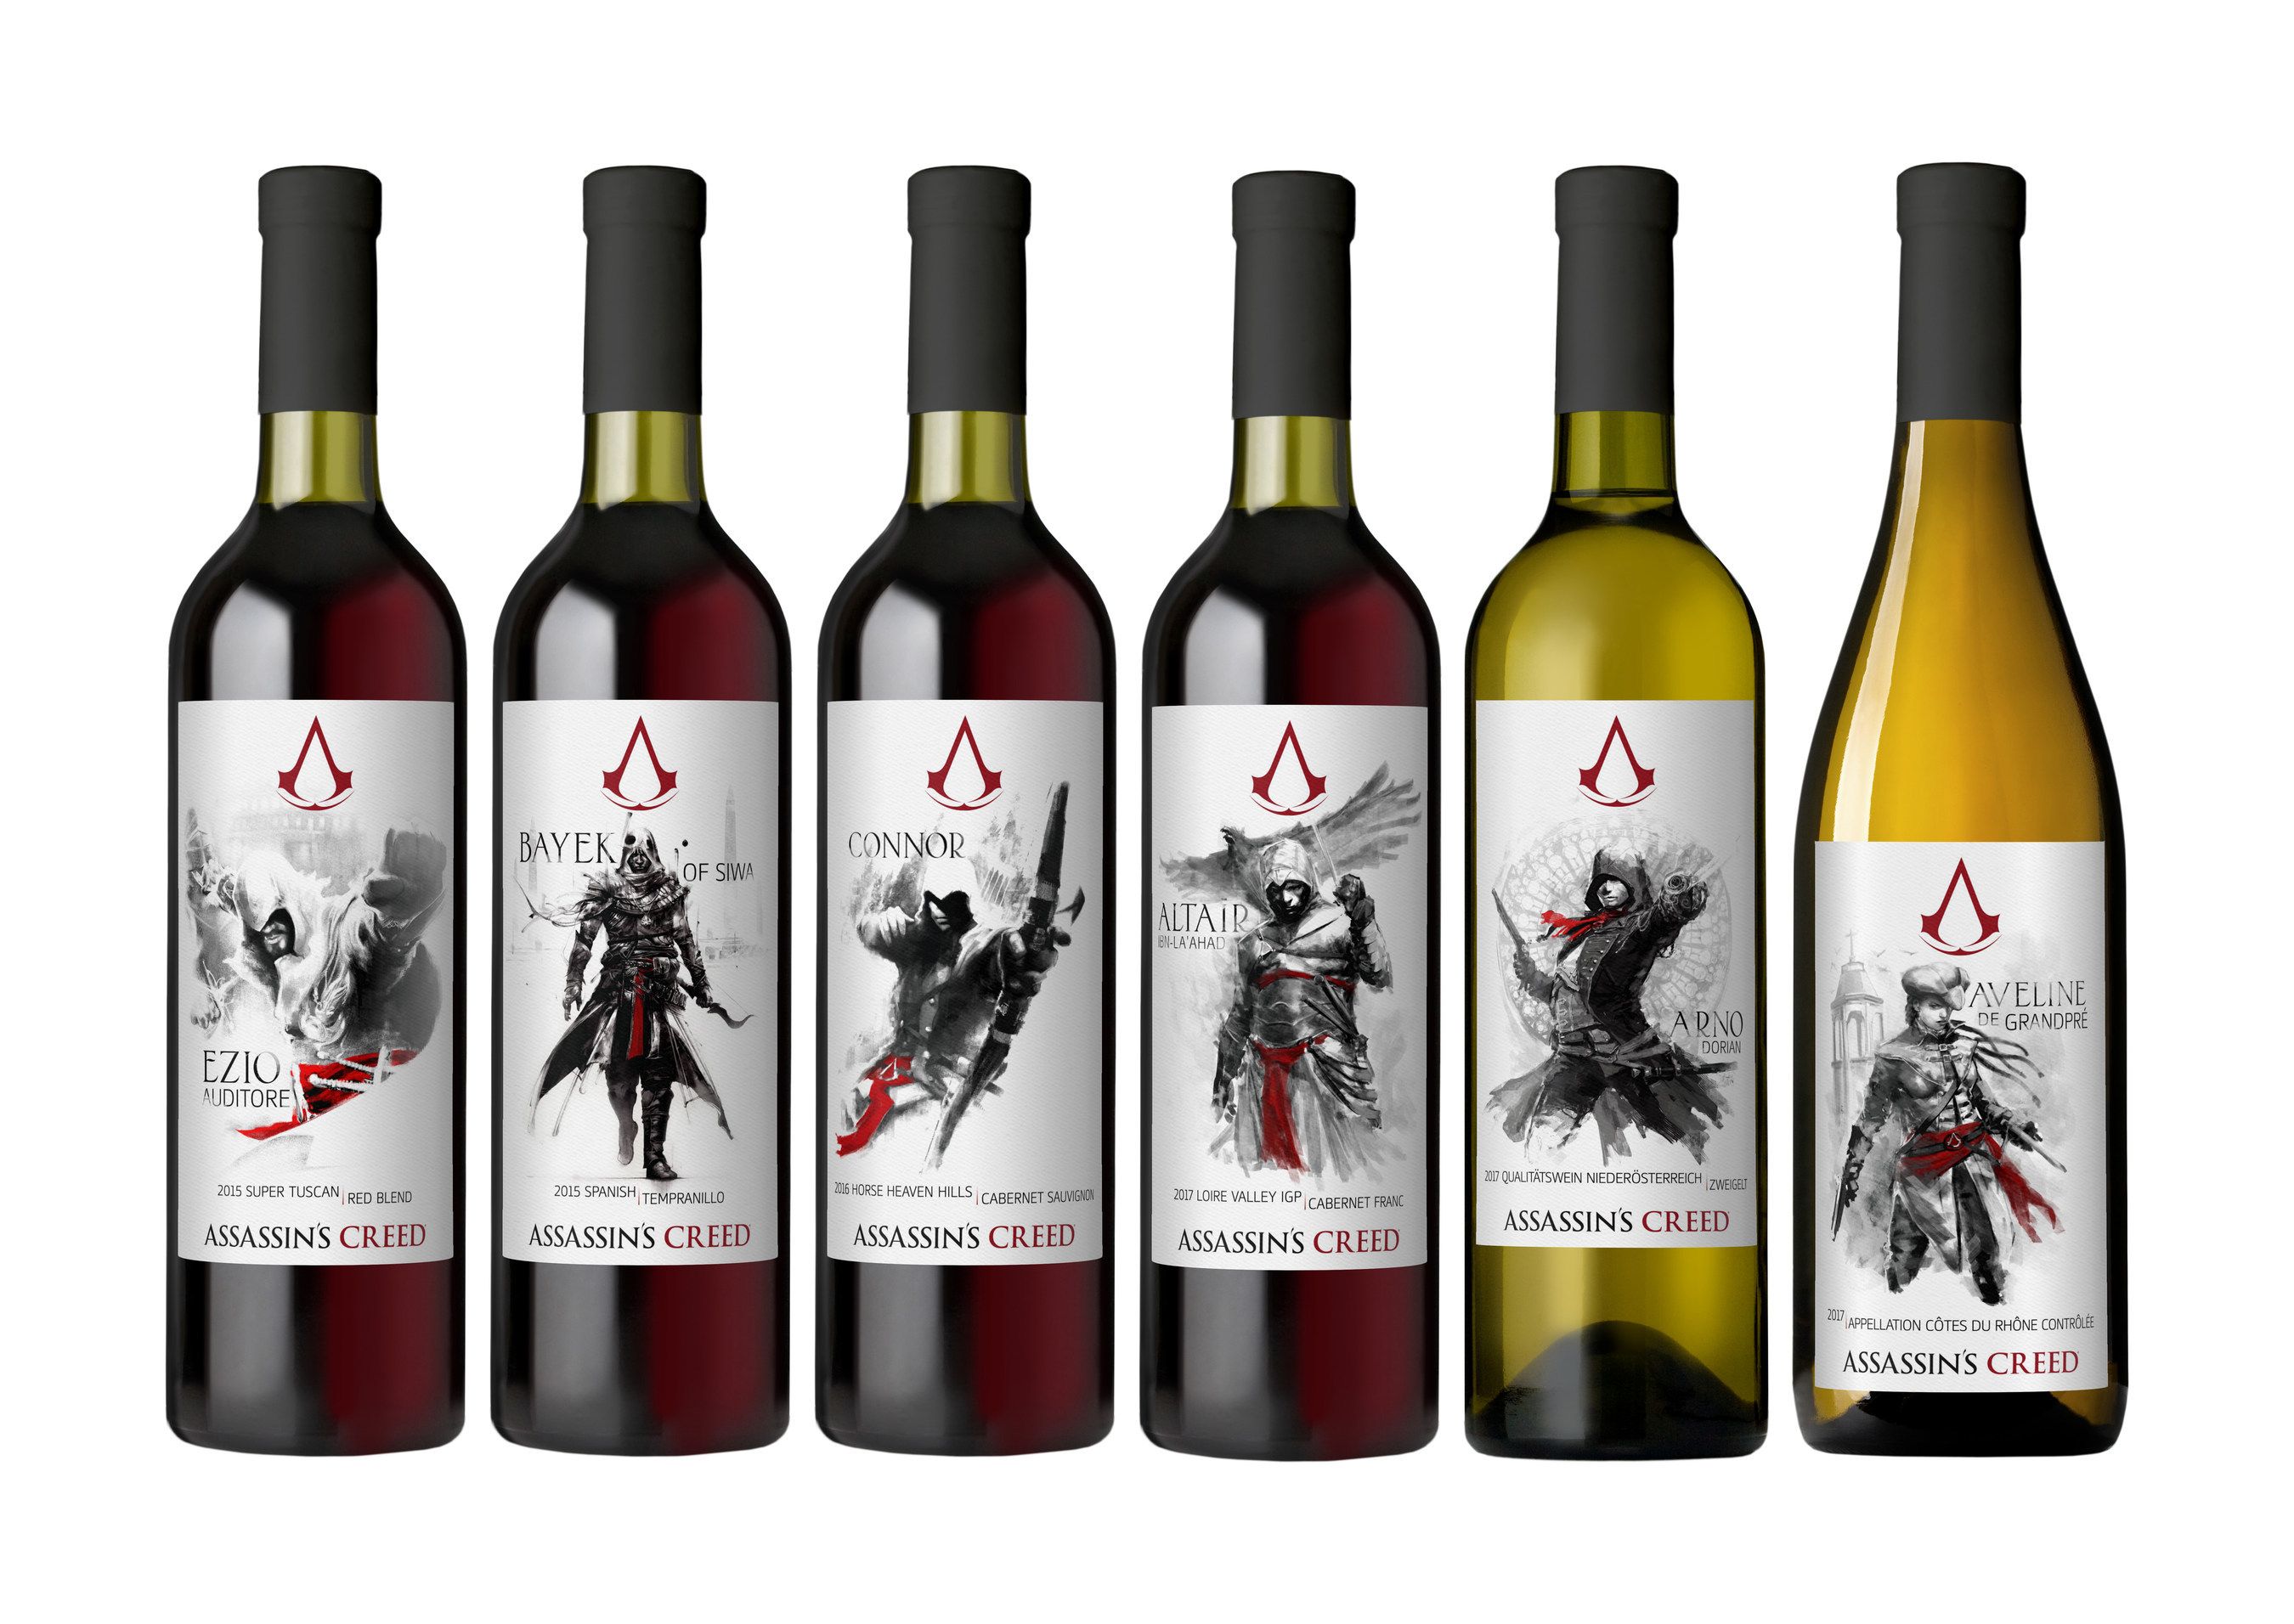 Assassin's Creed wine